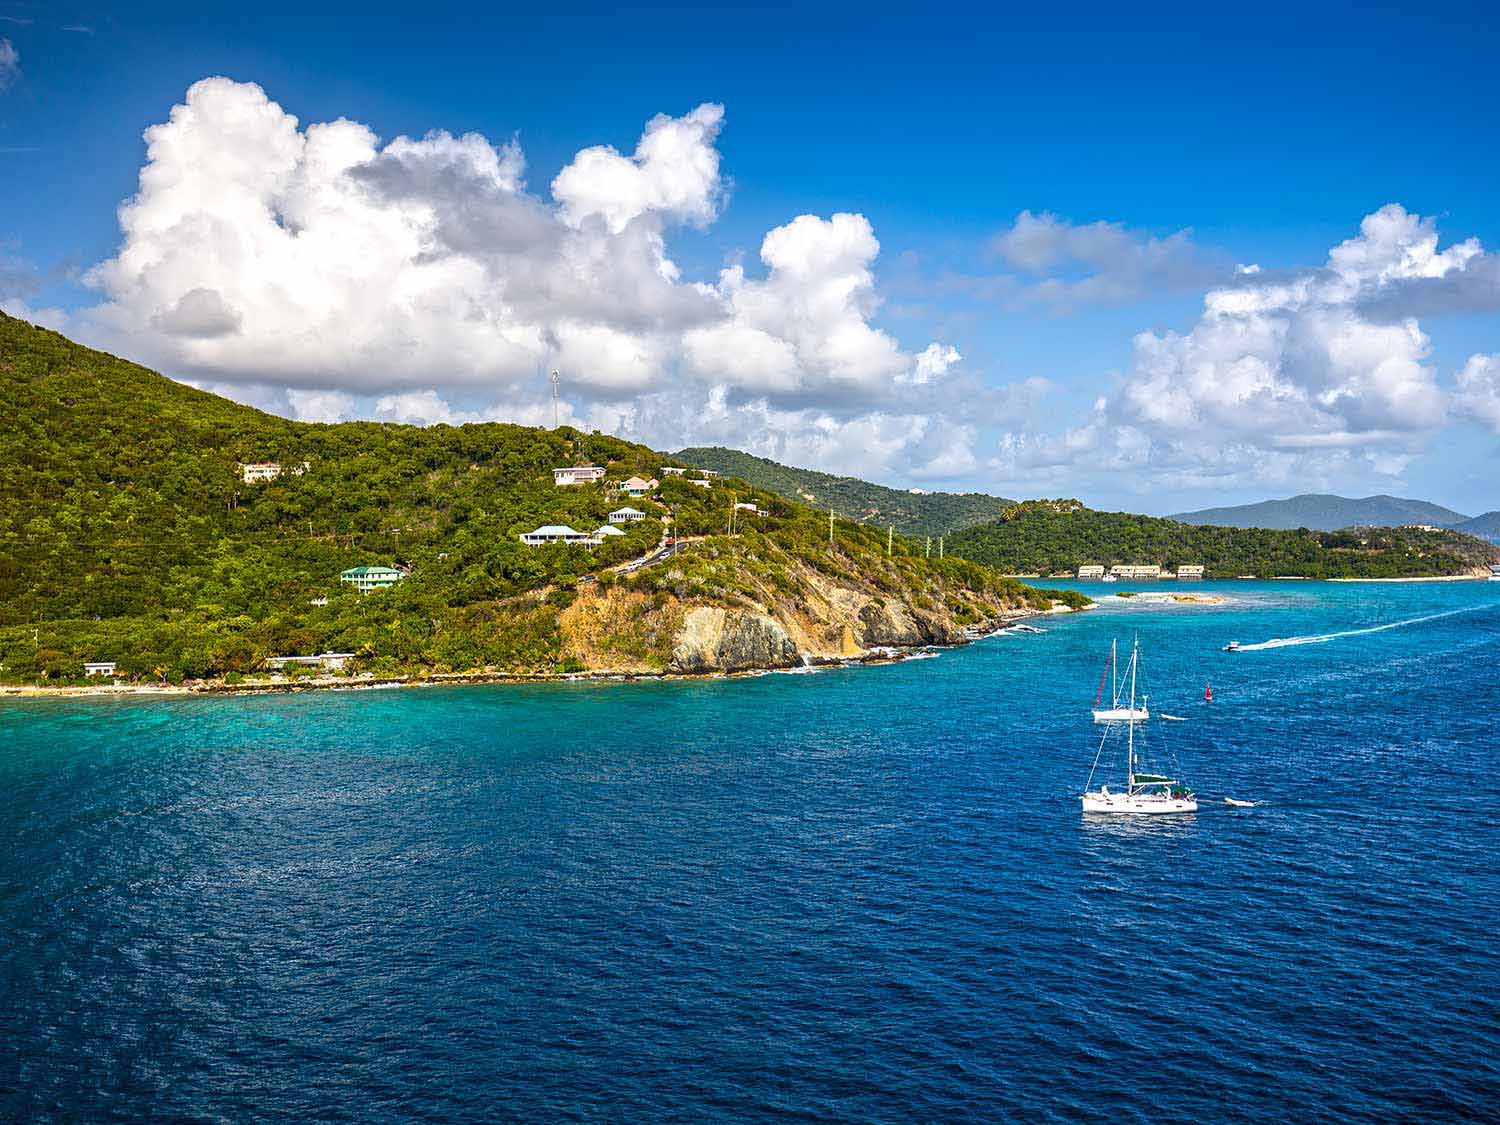 Tortola, the capital of the British Virgin Islands